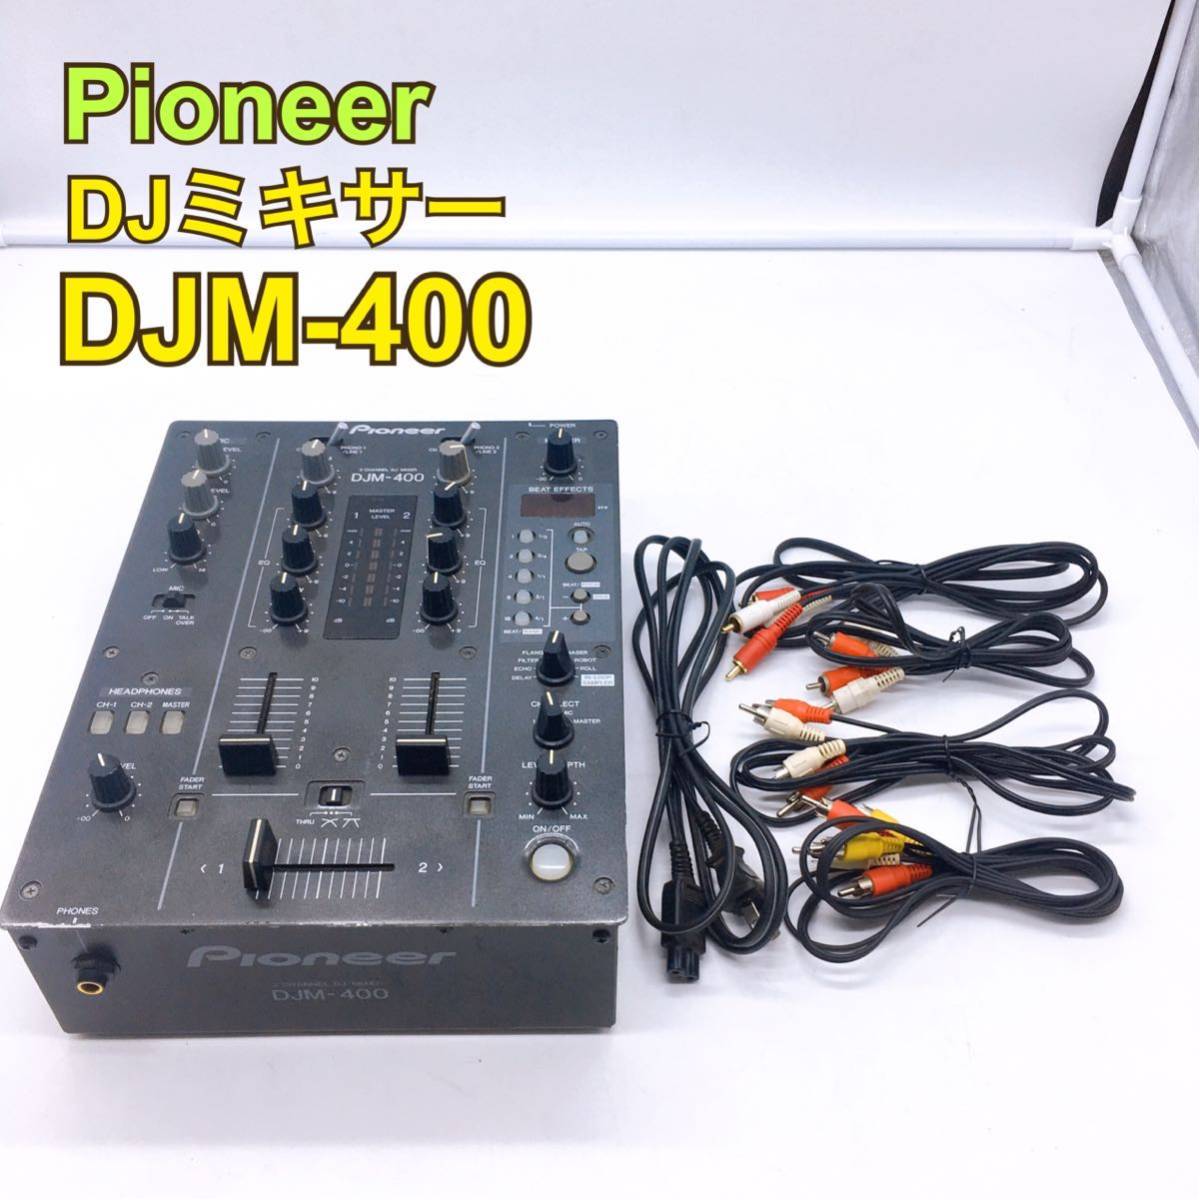 Pioneer DJM400 完動品 売り出し半額 capacitacion.bureauveritas.com.ec